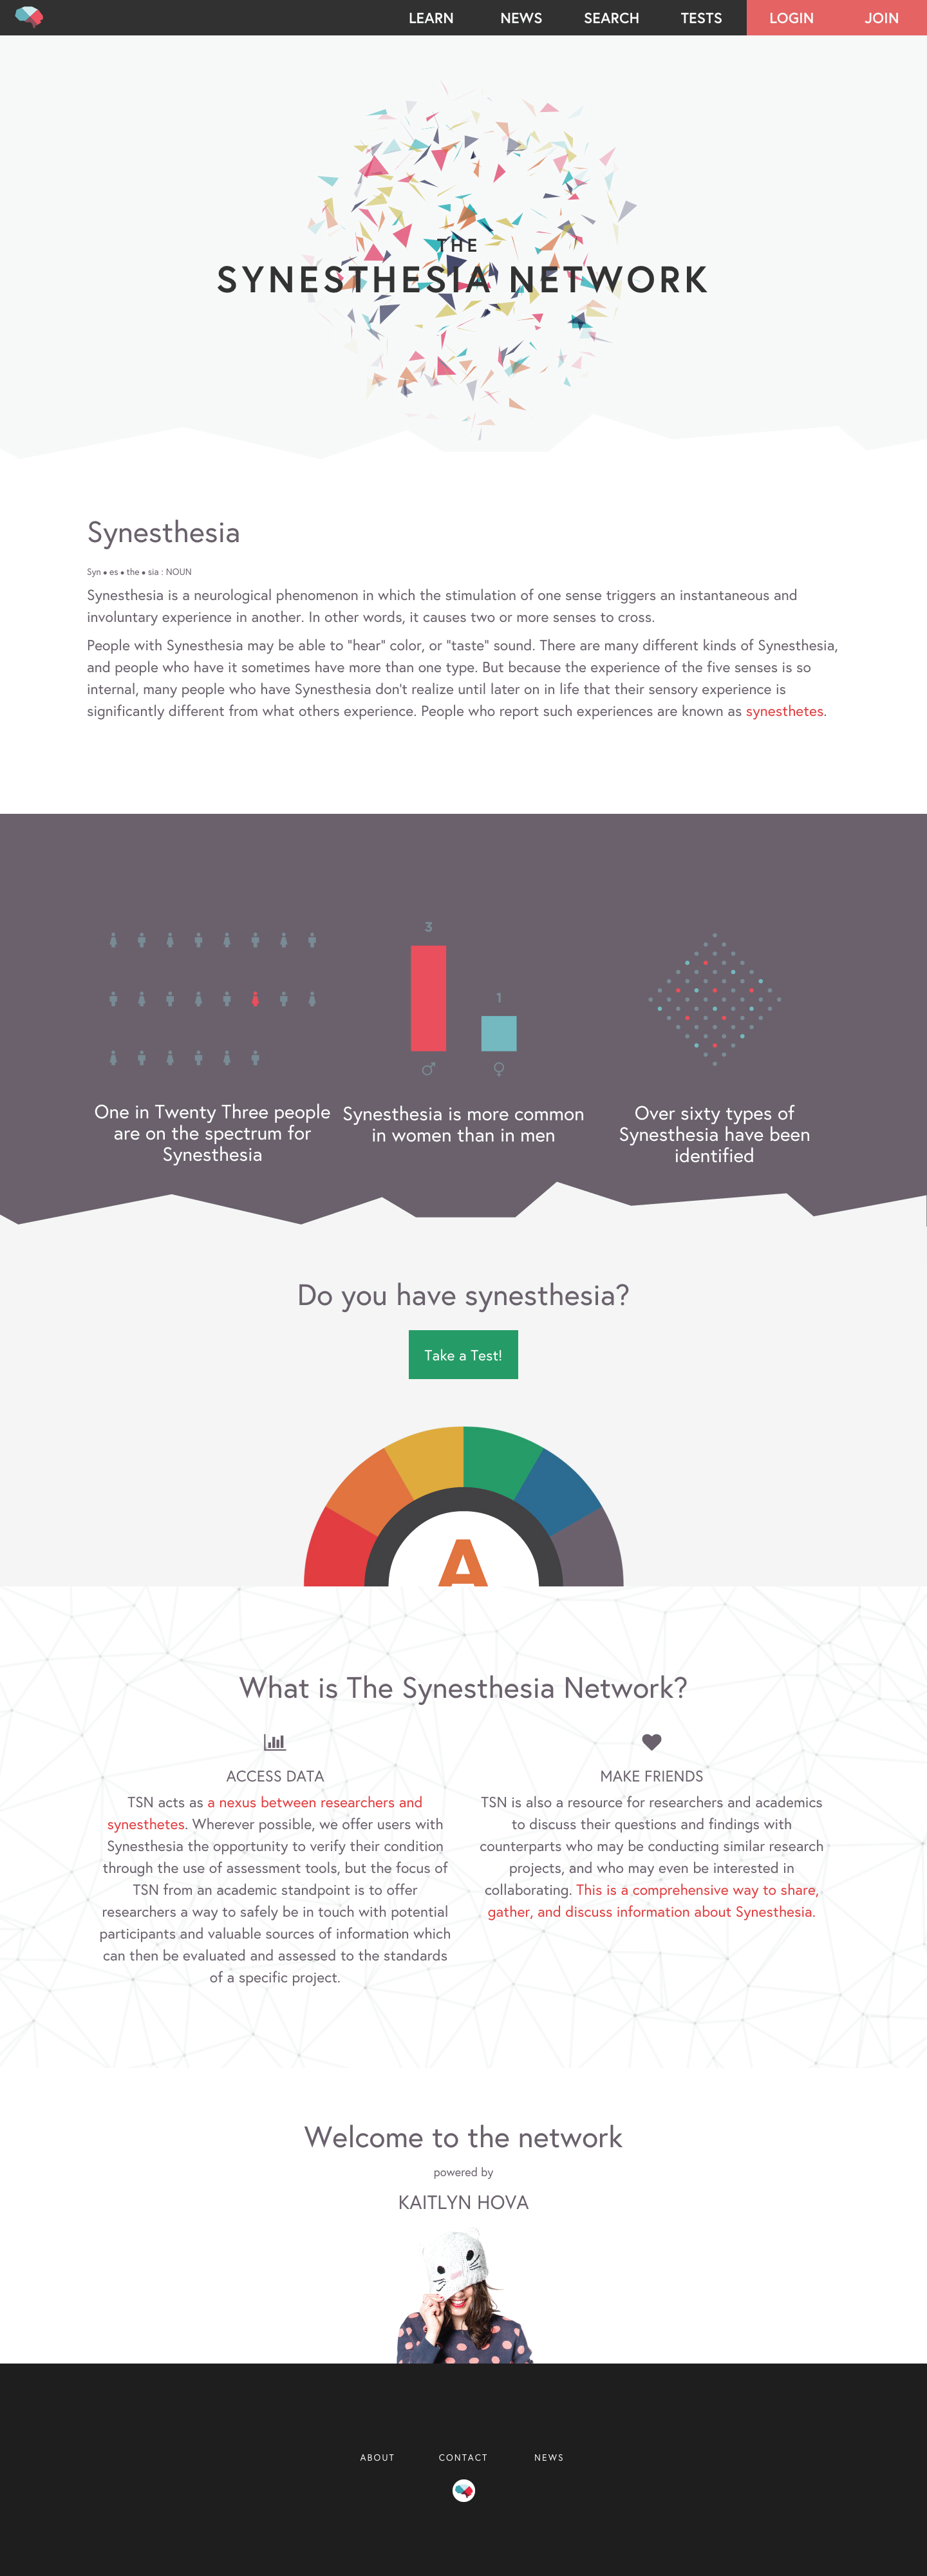 The Synesthesia Netork snapshot